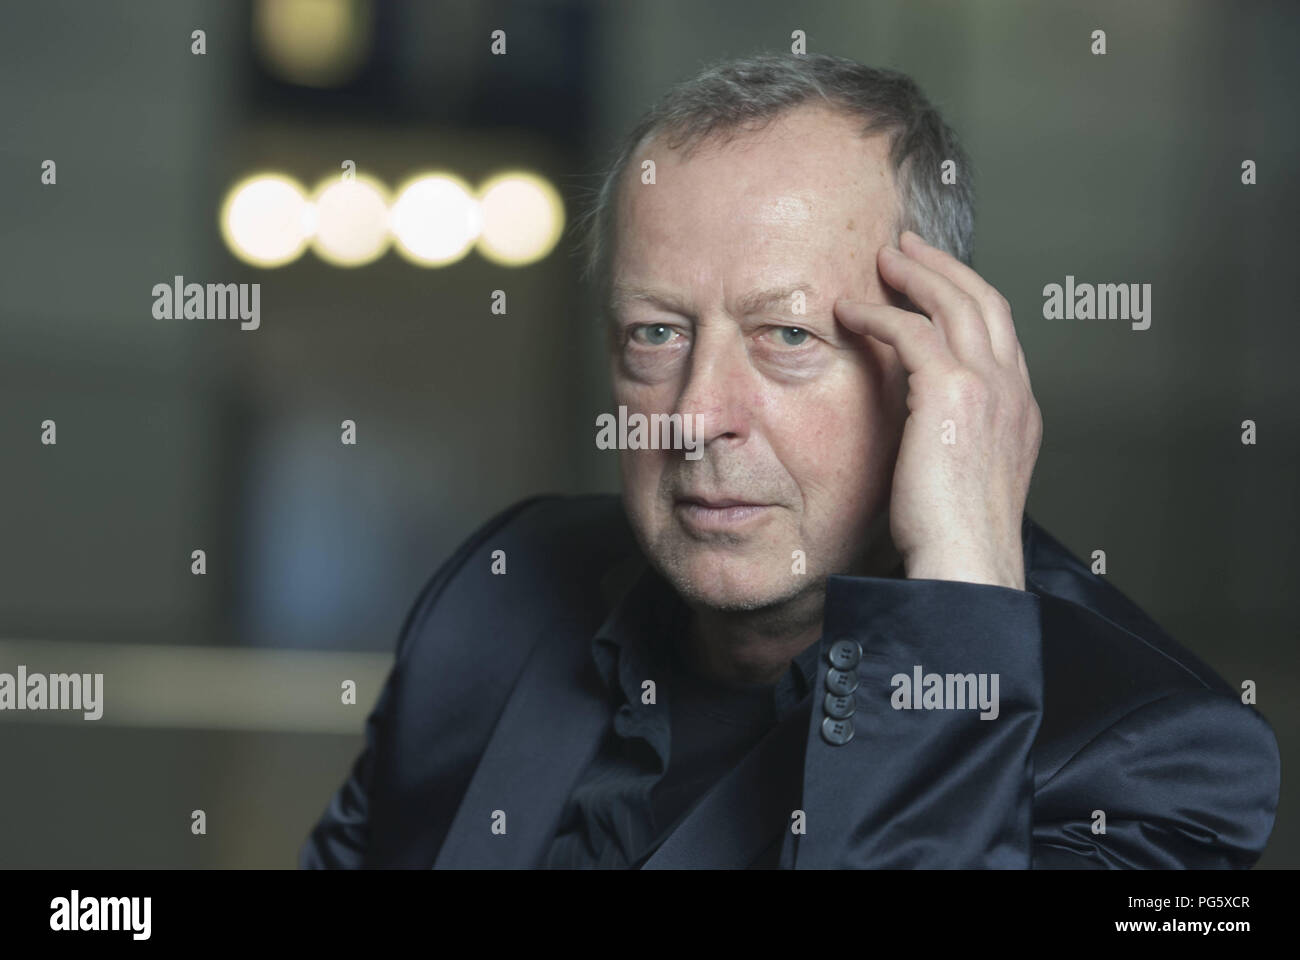 Leipzig, DEU, 16.03.2012: Portrait Manfred Geier, scientist, publicist, linguist, and author (Germany) Stock Photo